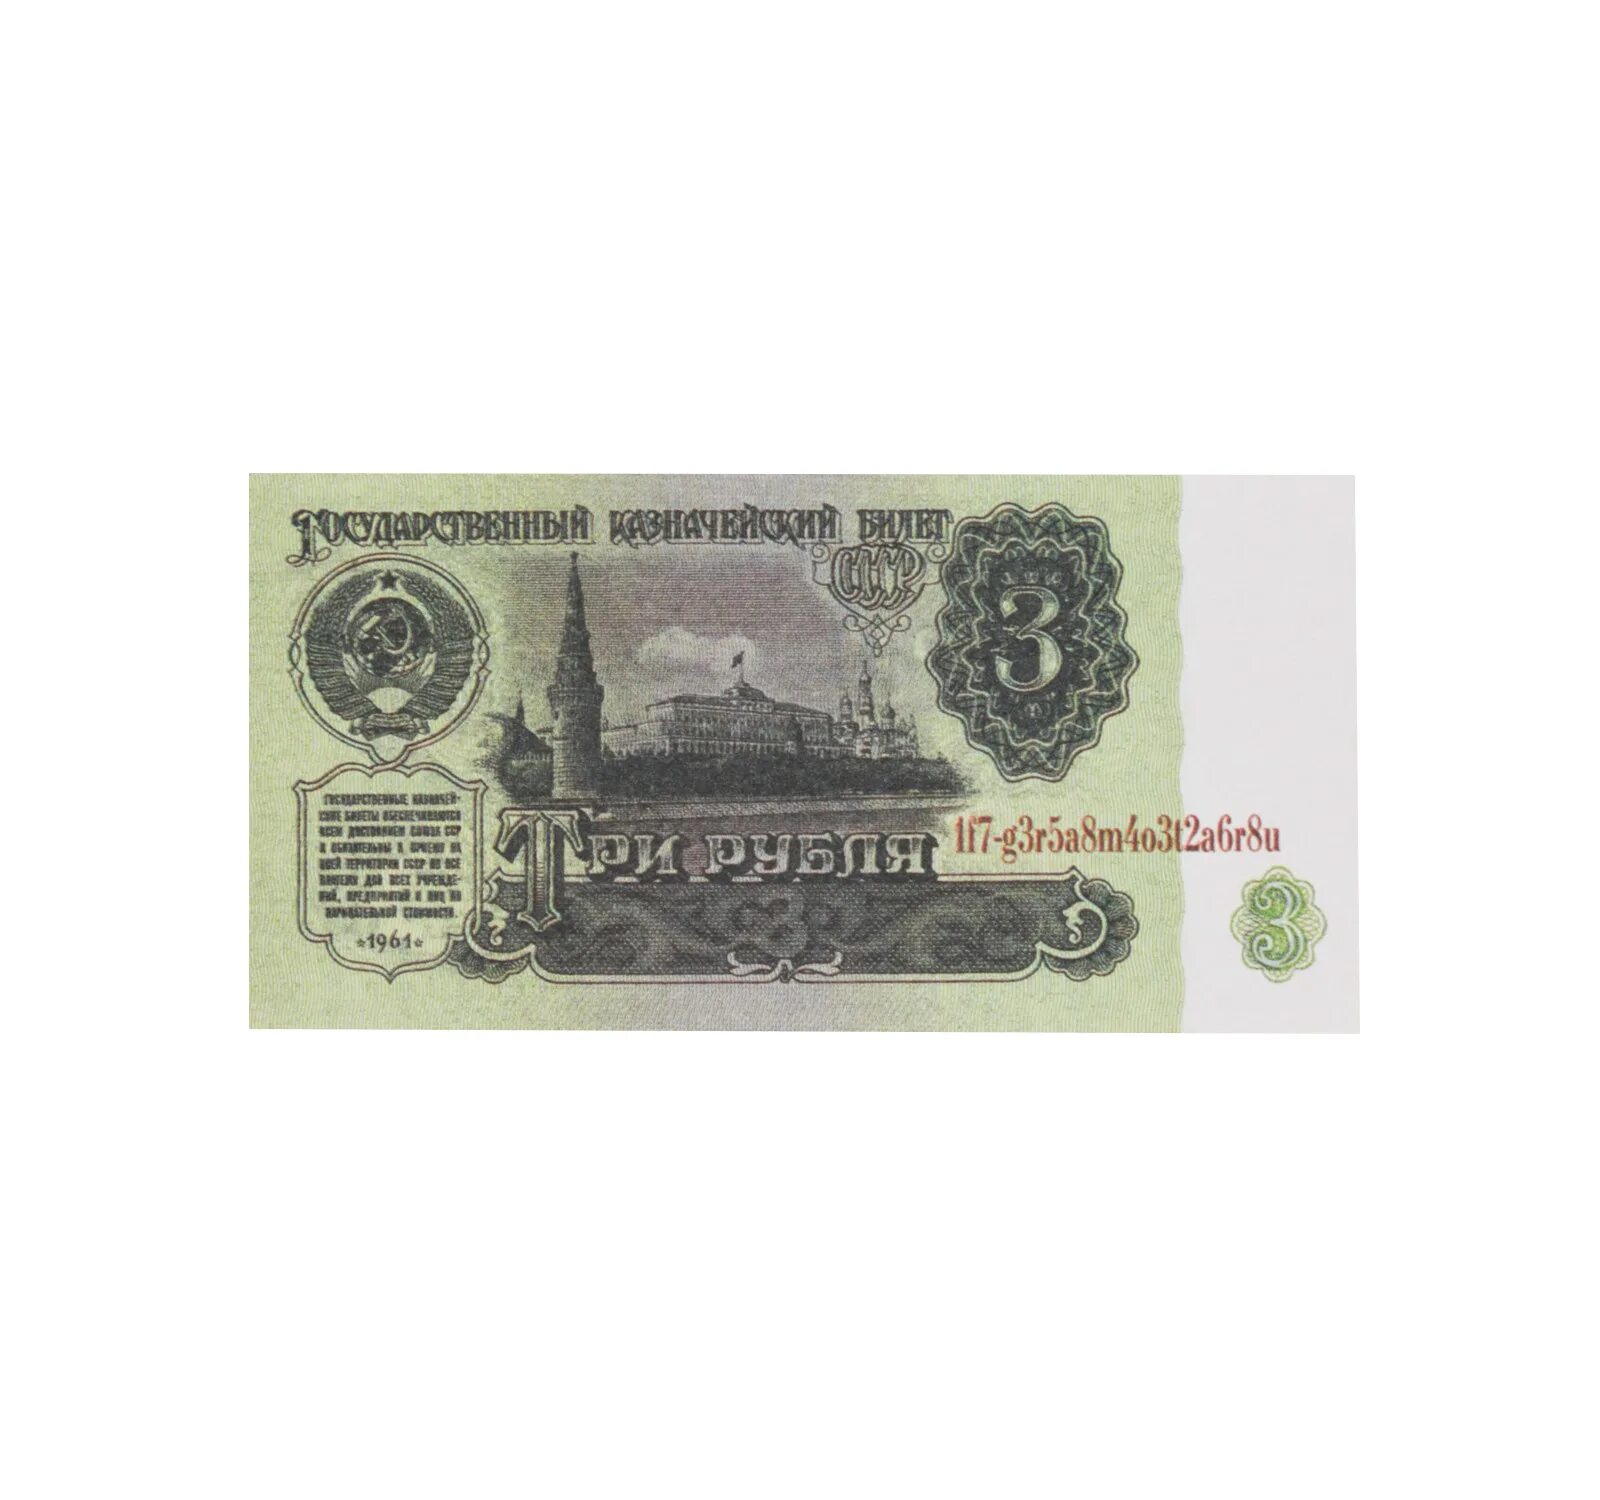 Продавать три рубля. Банкнота 3 рубля 1961. СССР 3 рубля 1961 год - f-VF. Банкнота 3 рубля 1961 года. Деньги 3 рубля 1961 года.